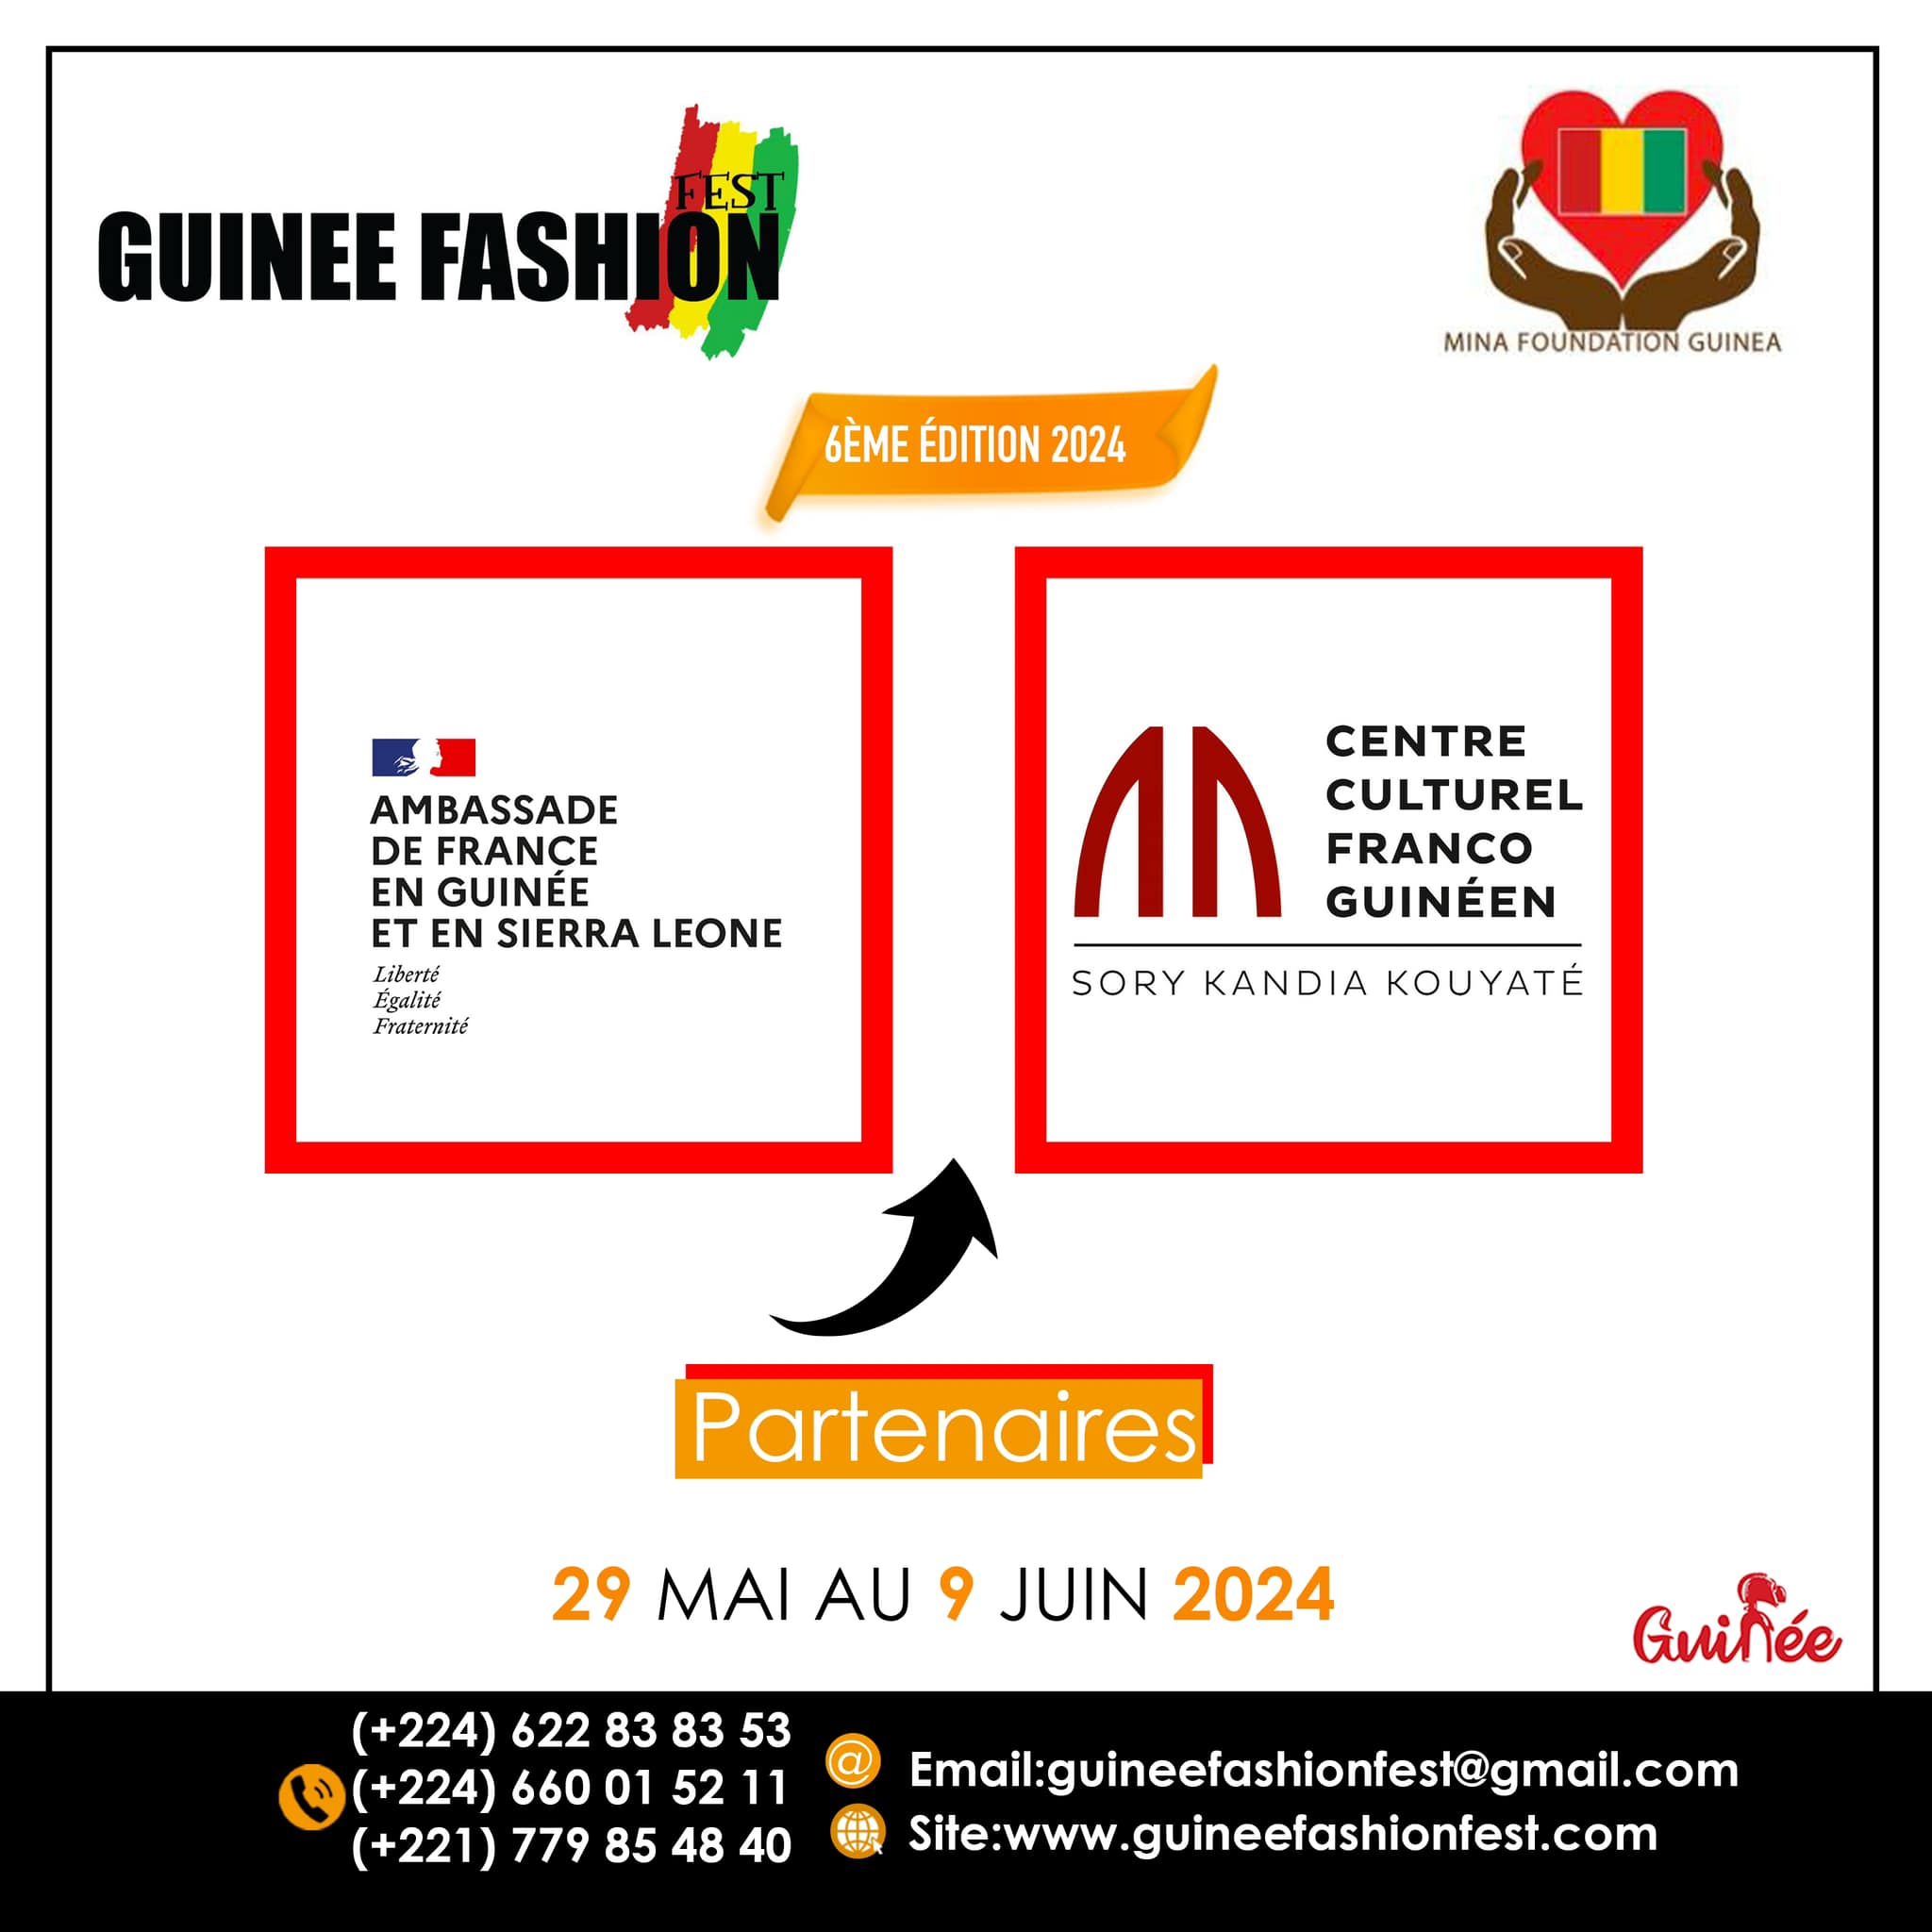 GUINEE FASHION FEST -6EME EDITION - OFFICIAL PARTNERS